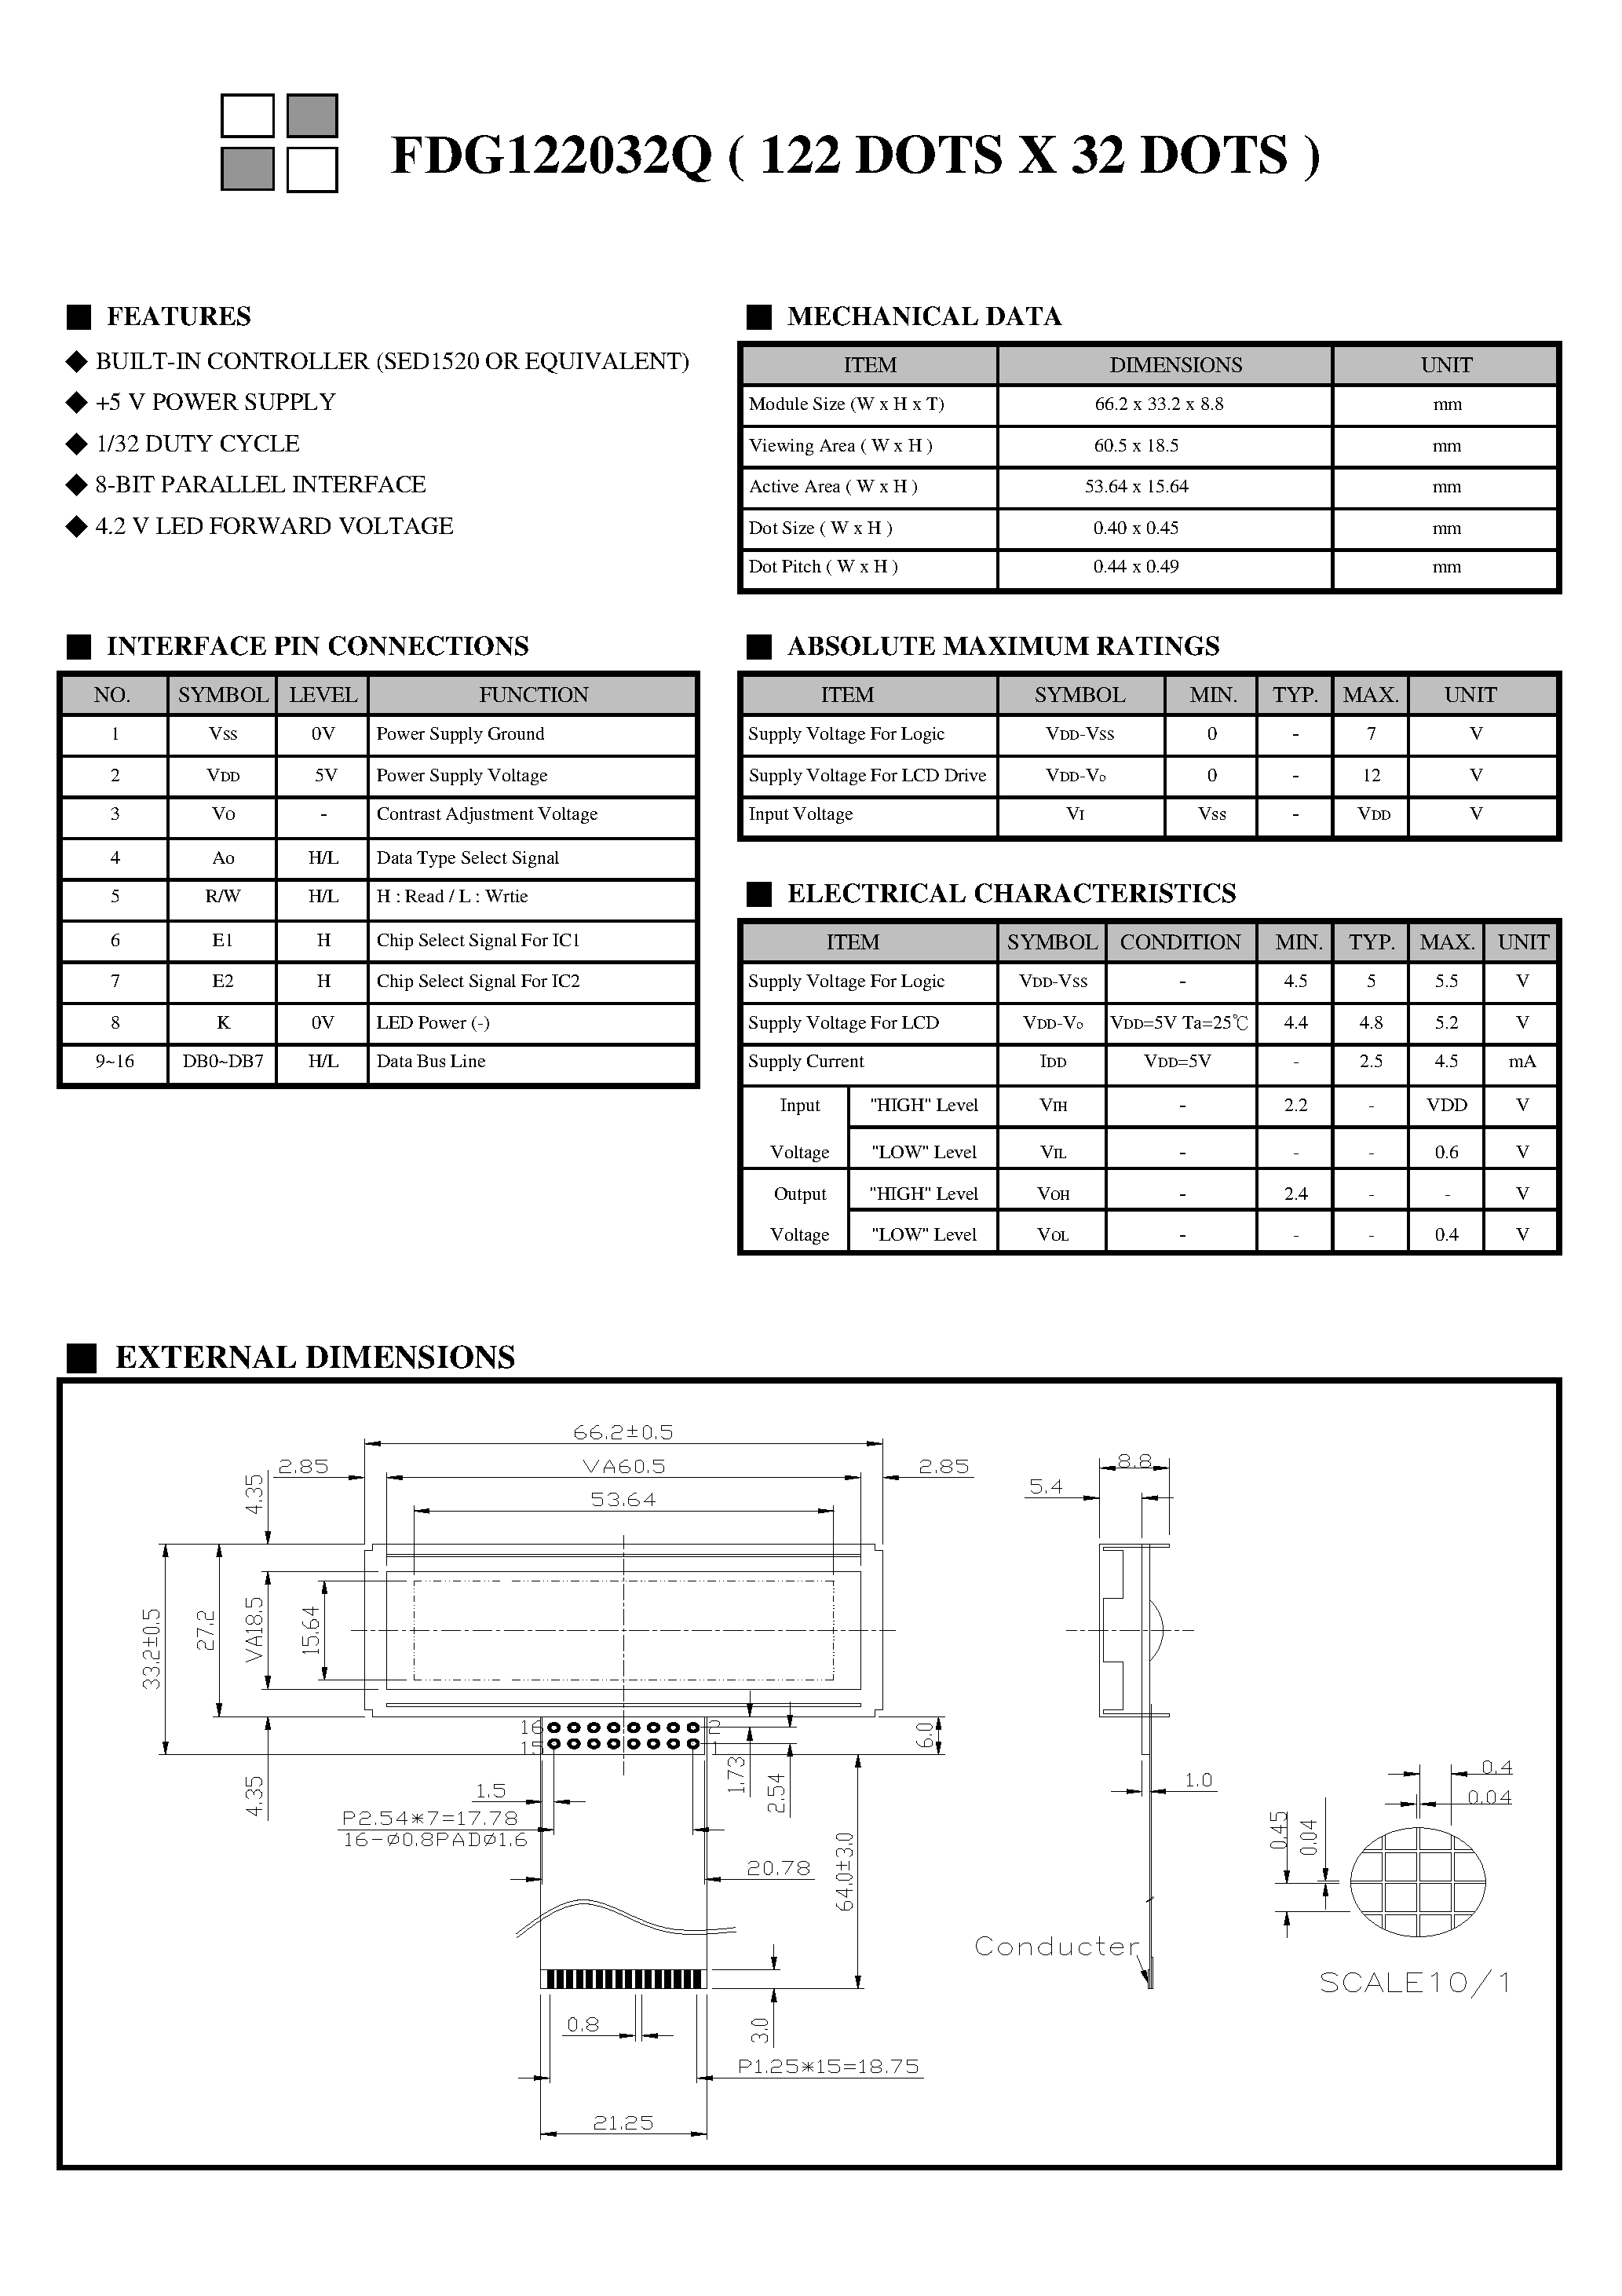 Datasheet FDG122032Q - Monochrome Lcd Module page 2